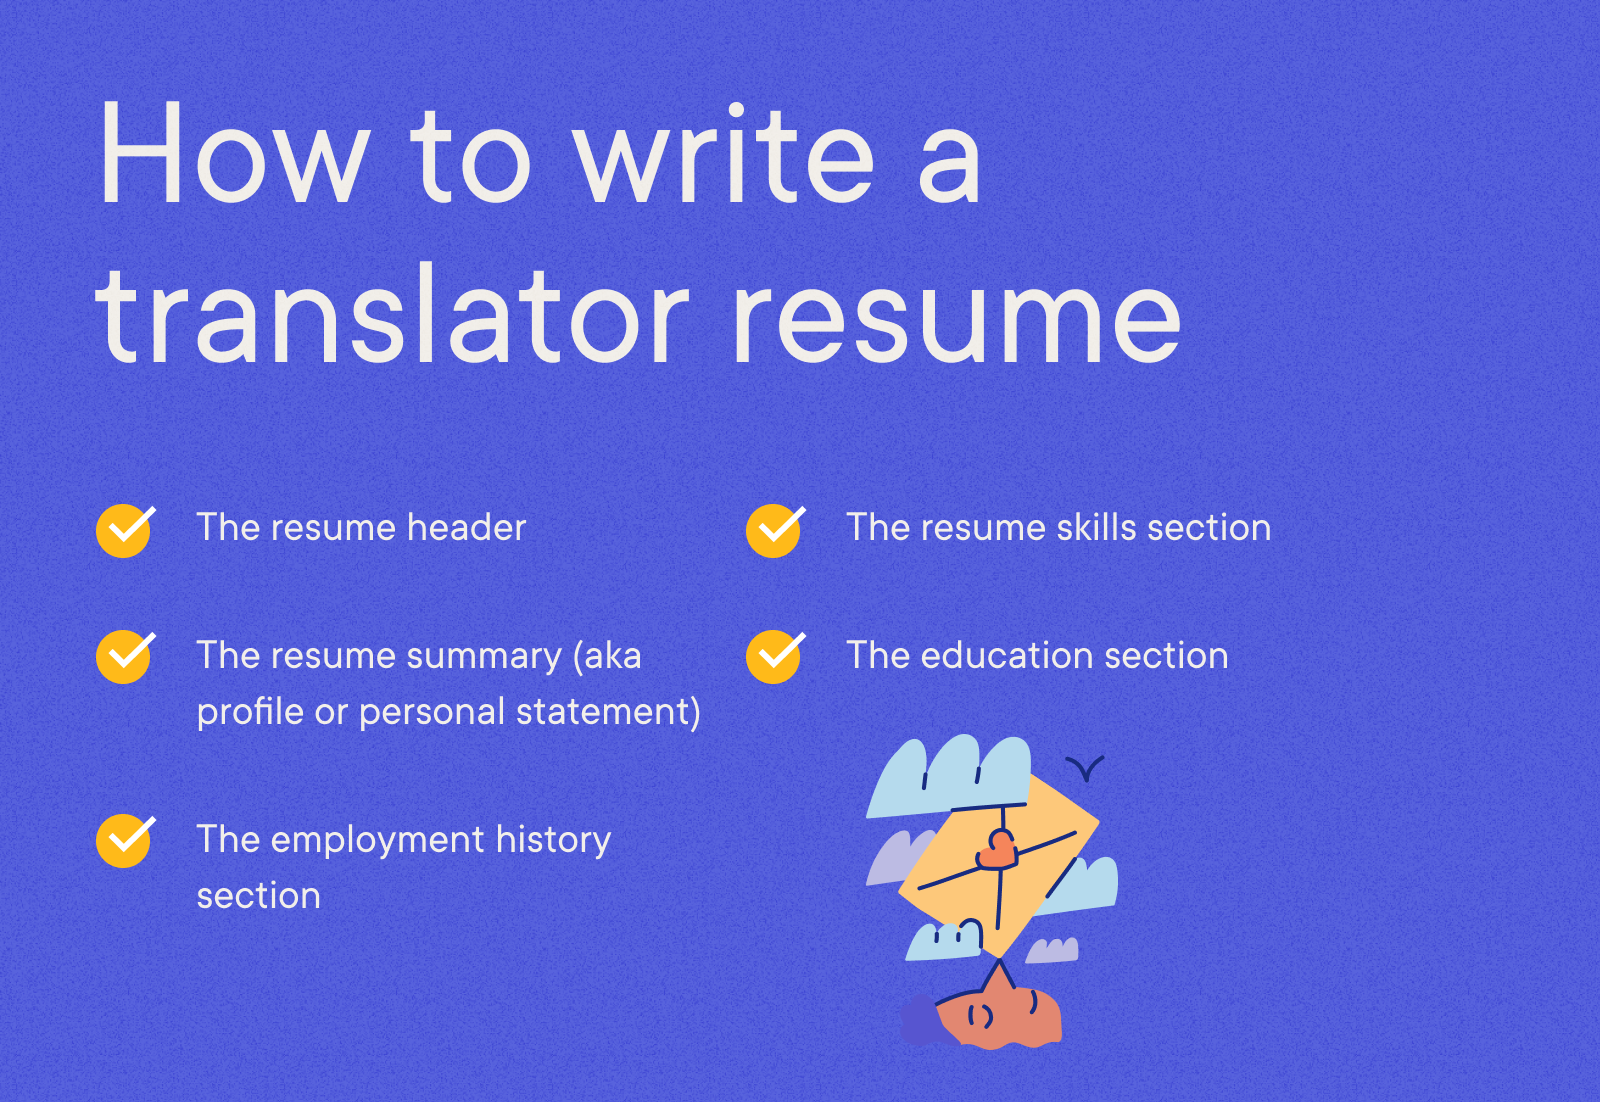 Translator - How to write a translator resume